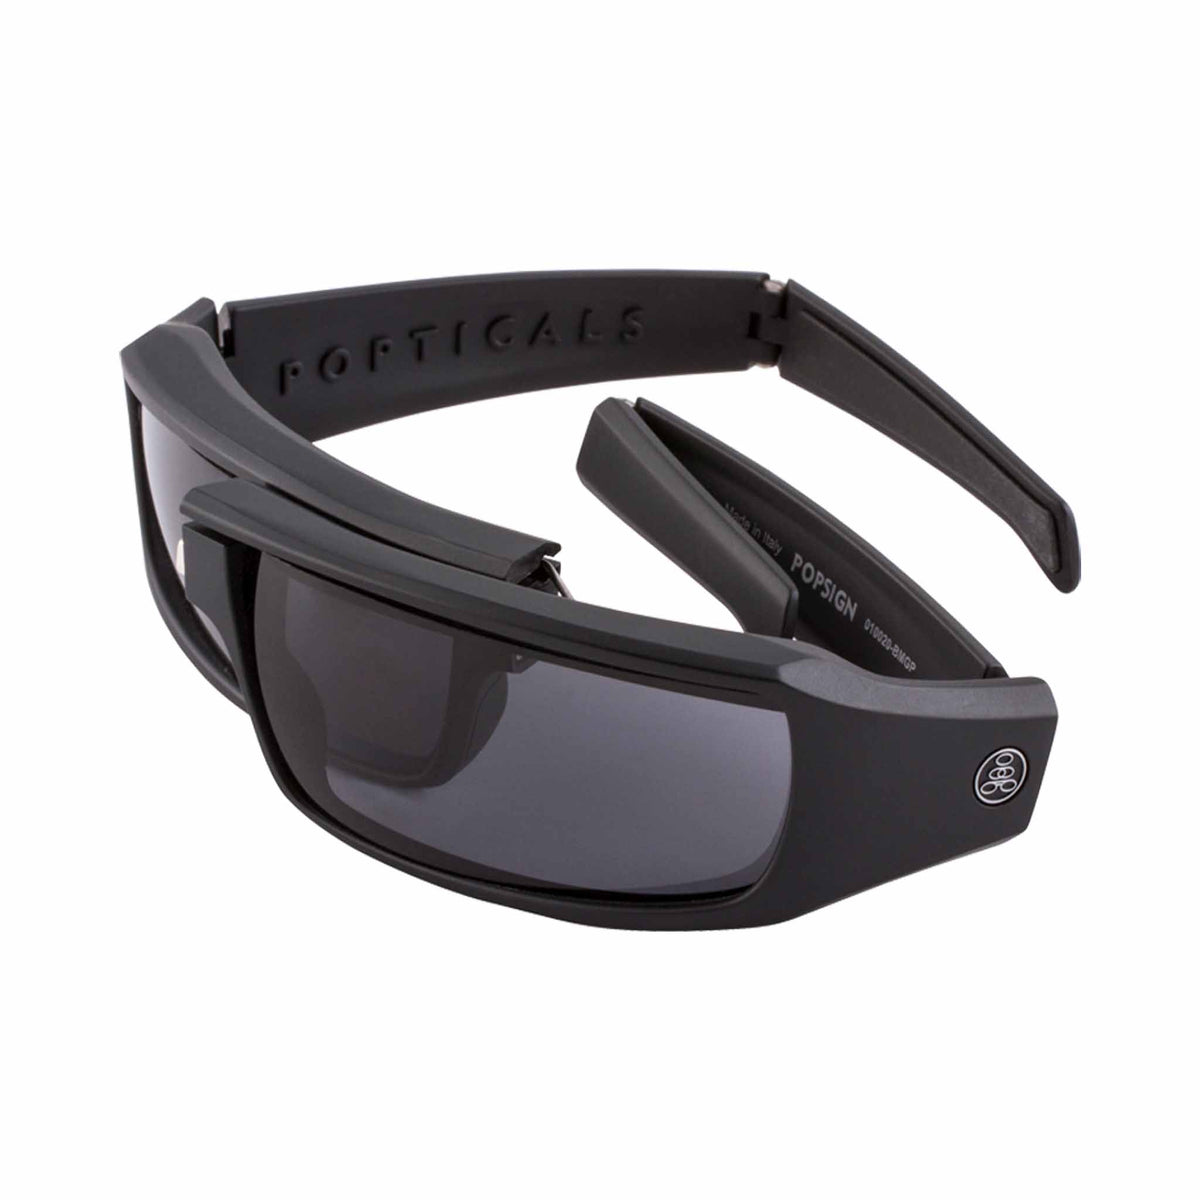 Popticals, Premium Compact Sunglasses, PopSign, 010020-BMGP, Polarized Sunglasses, Matte Black Frame, Gray Lenses, Spider View